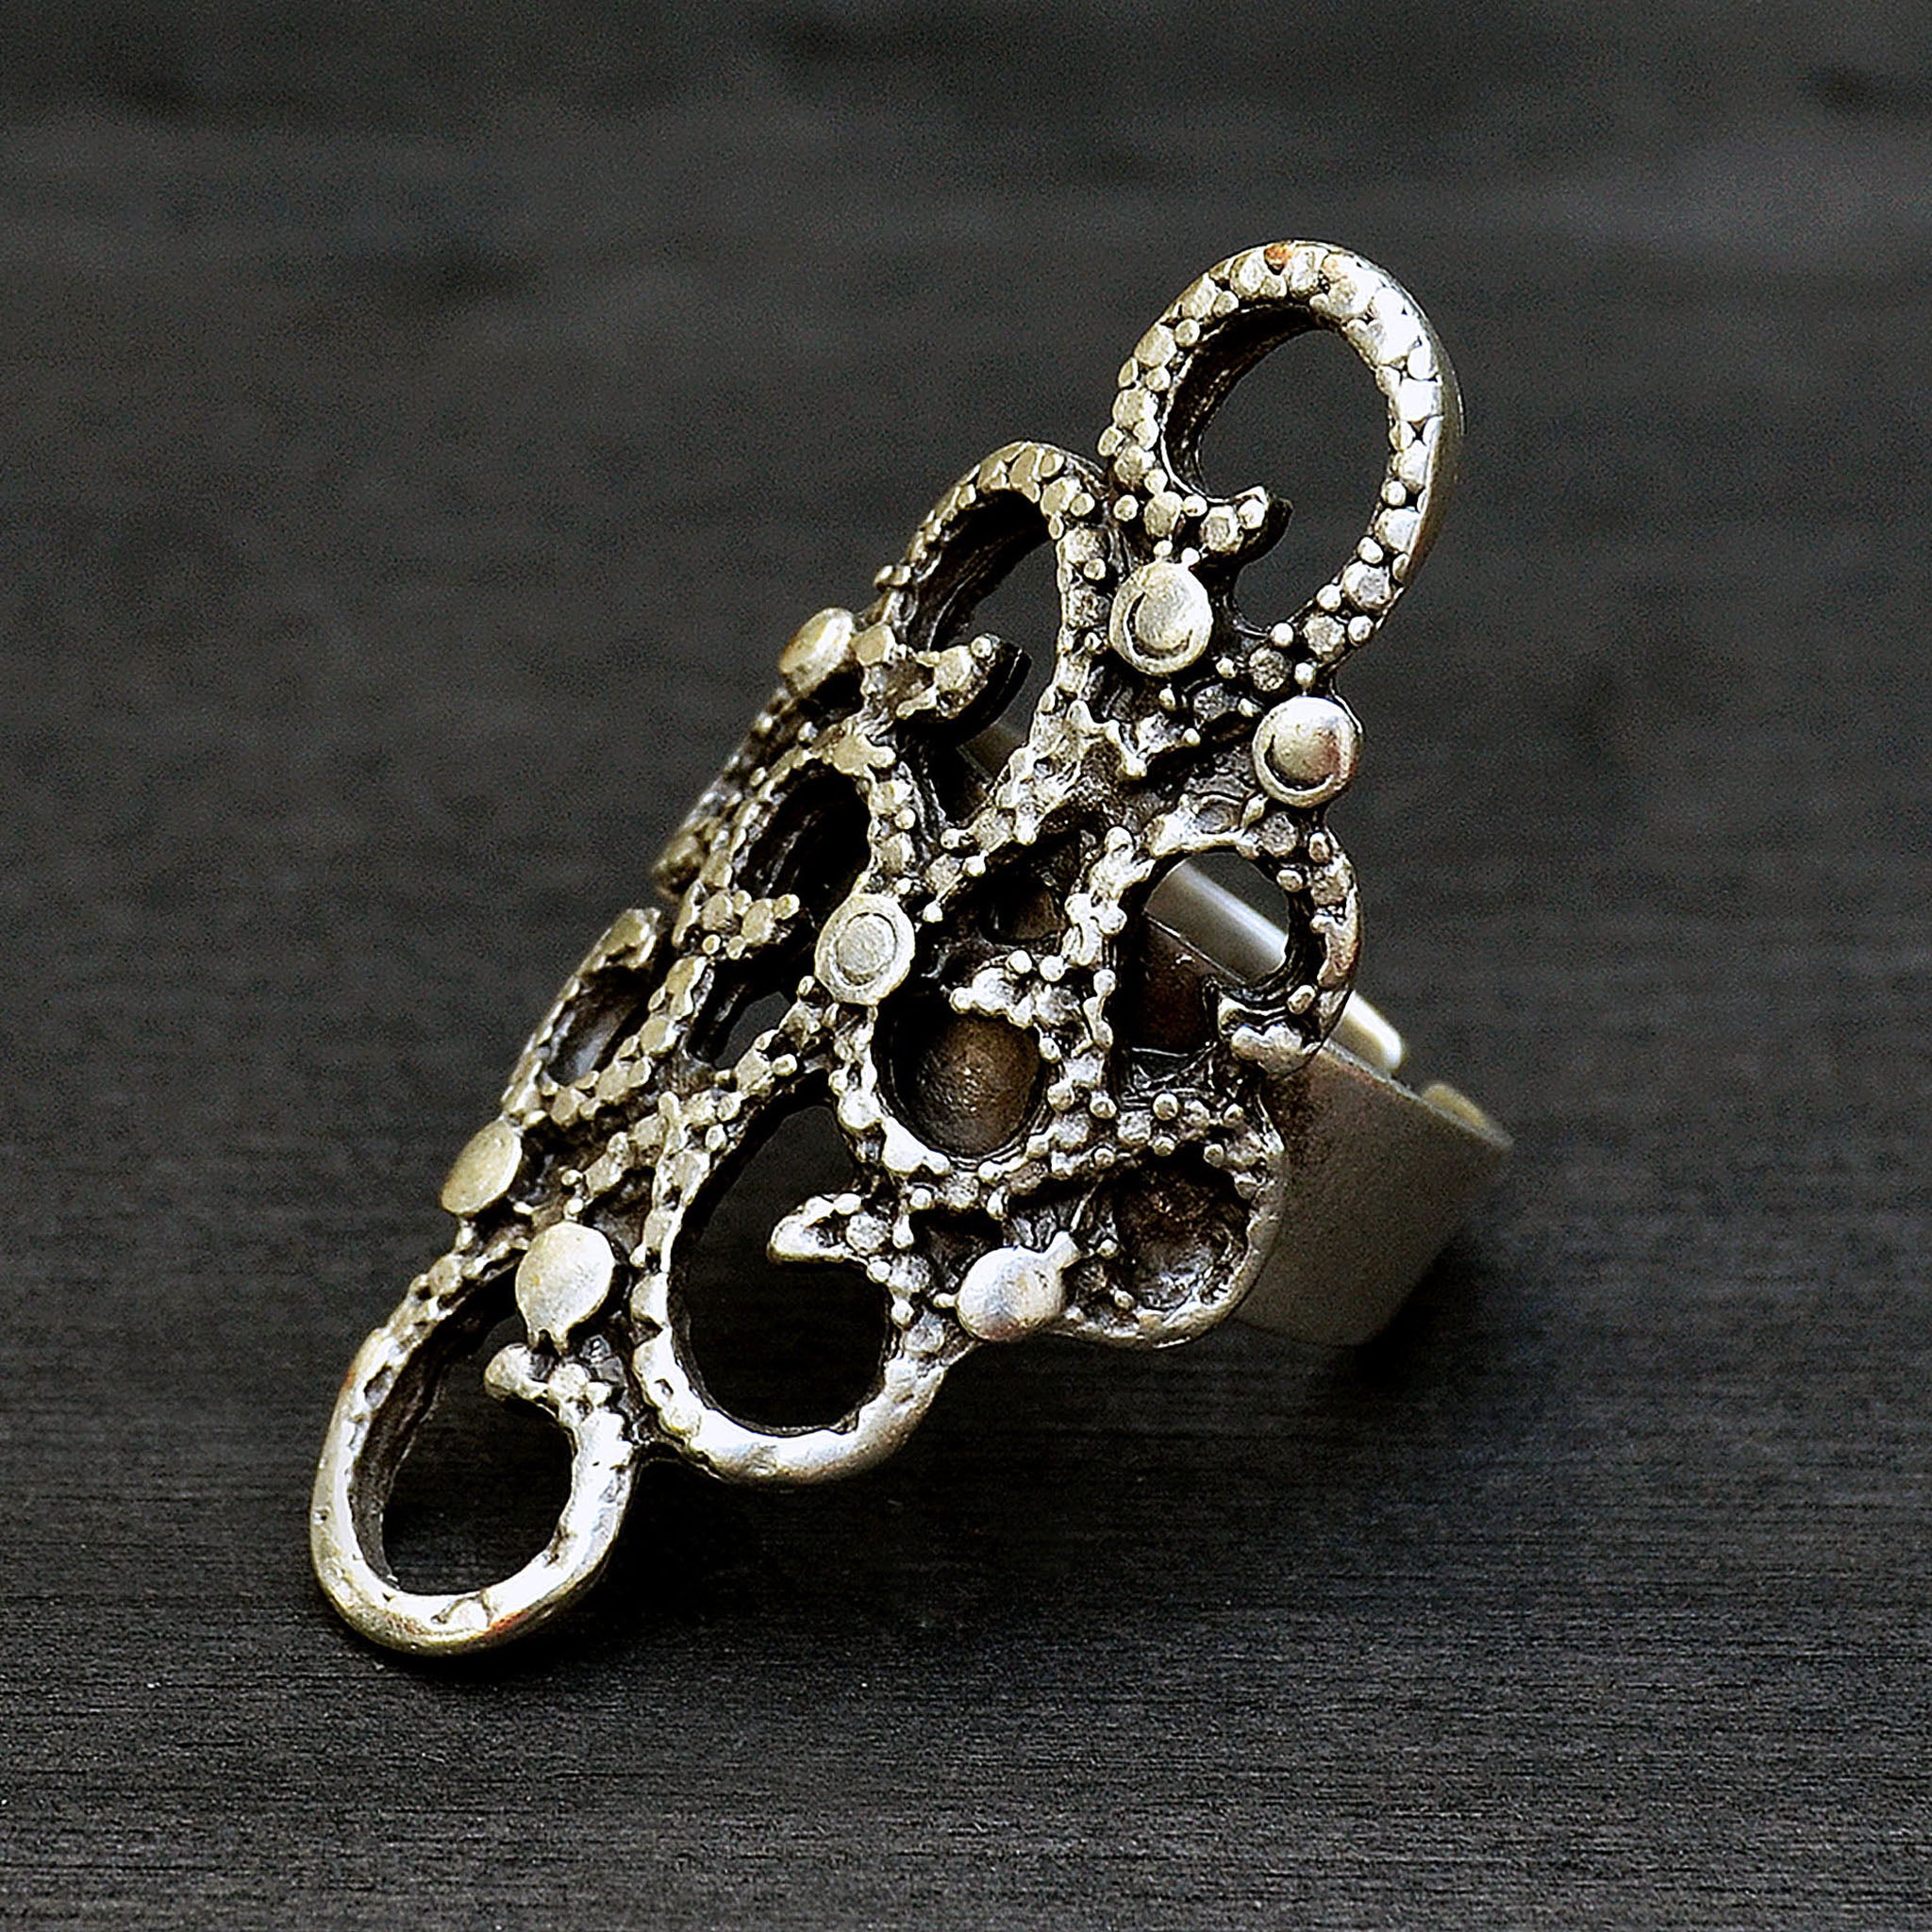 Silver gothic filigree ring